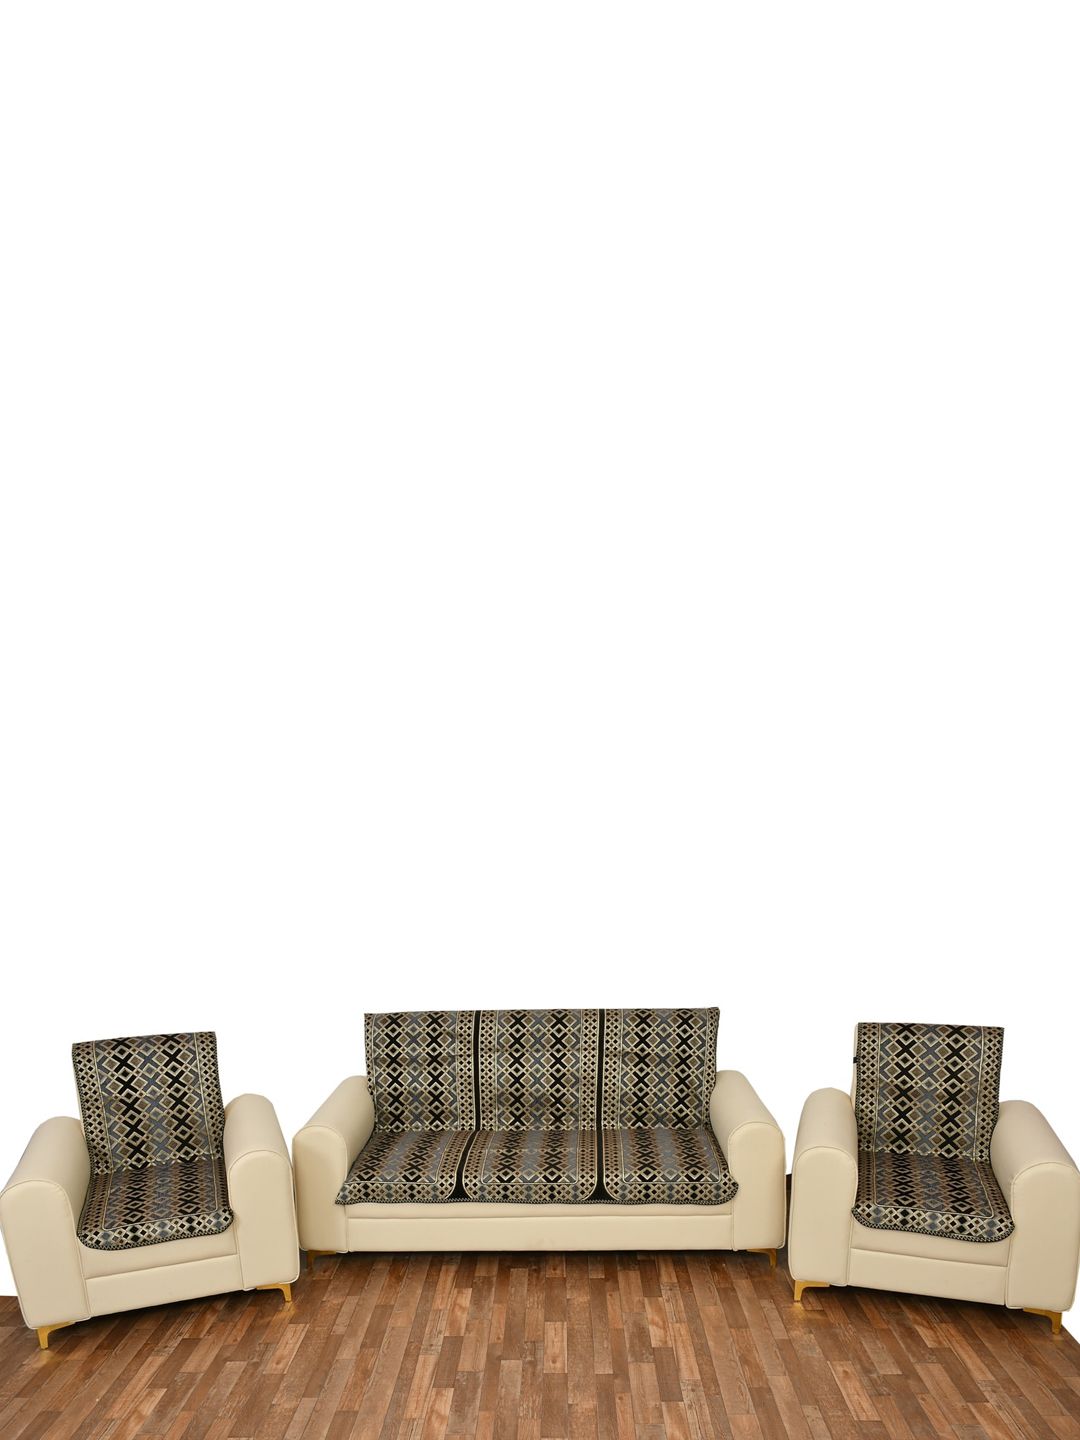 MULTITEX Black & Biege Printed 5-Seater Sofa Covers Price in India